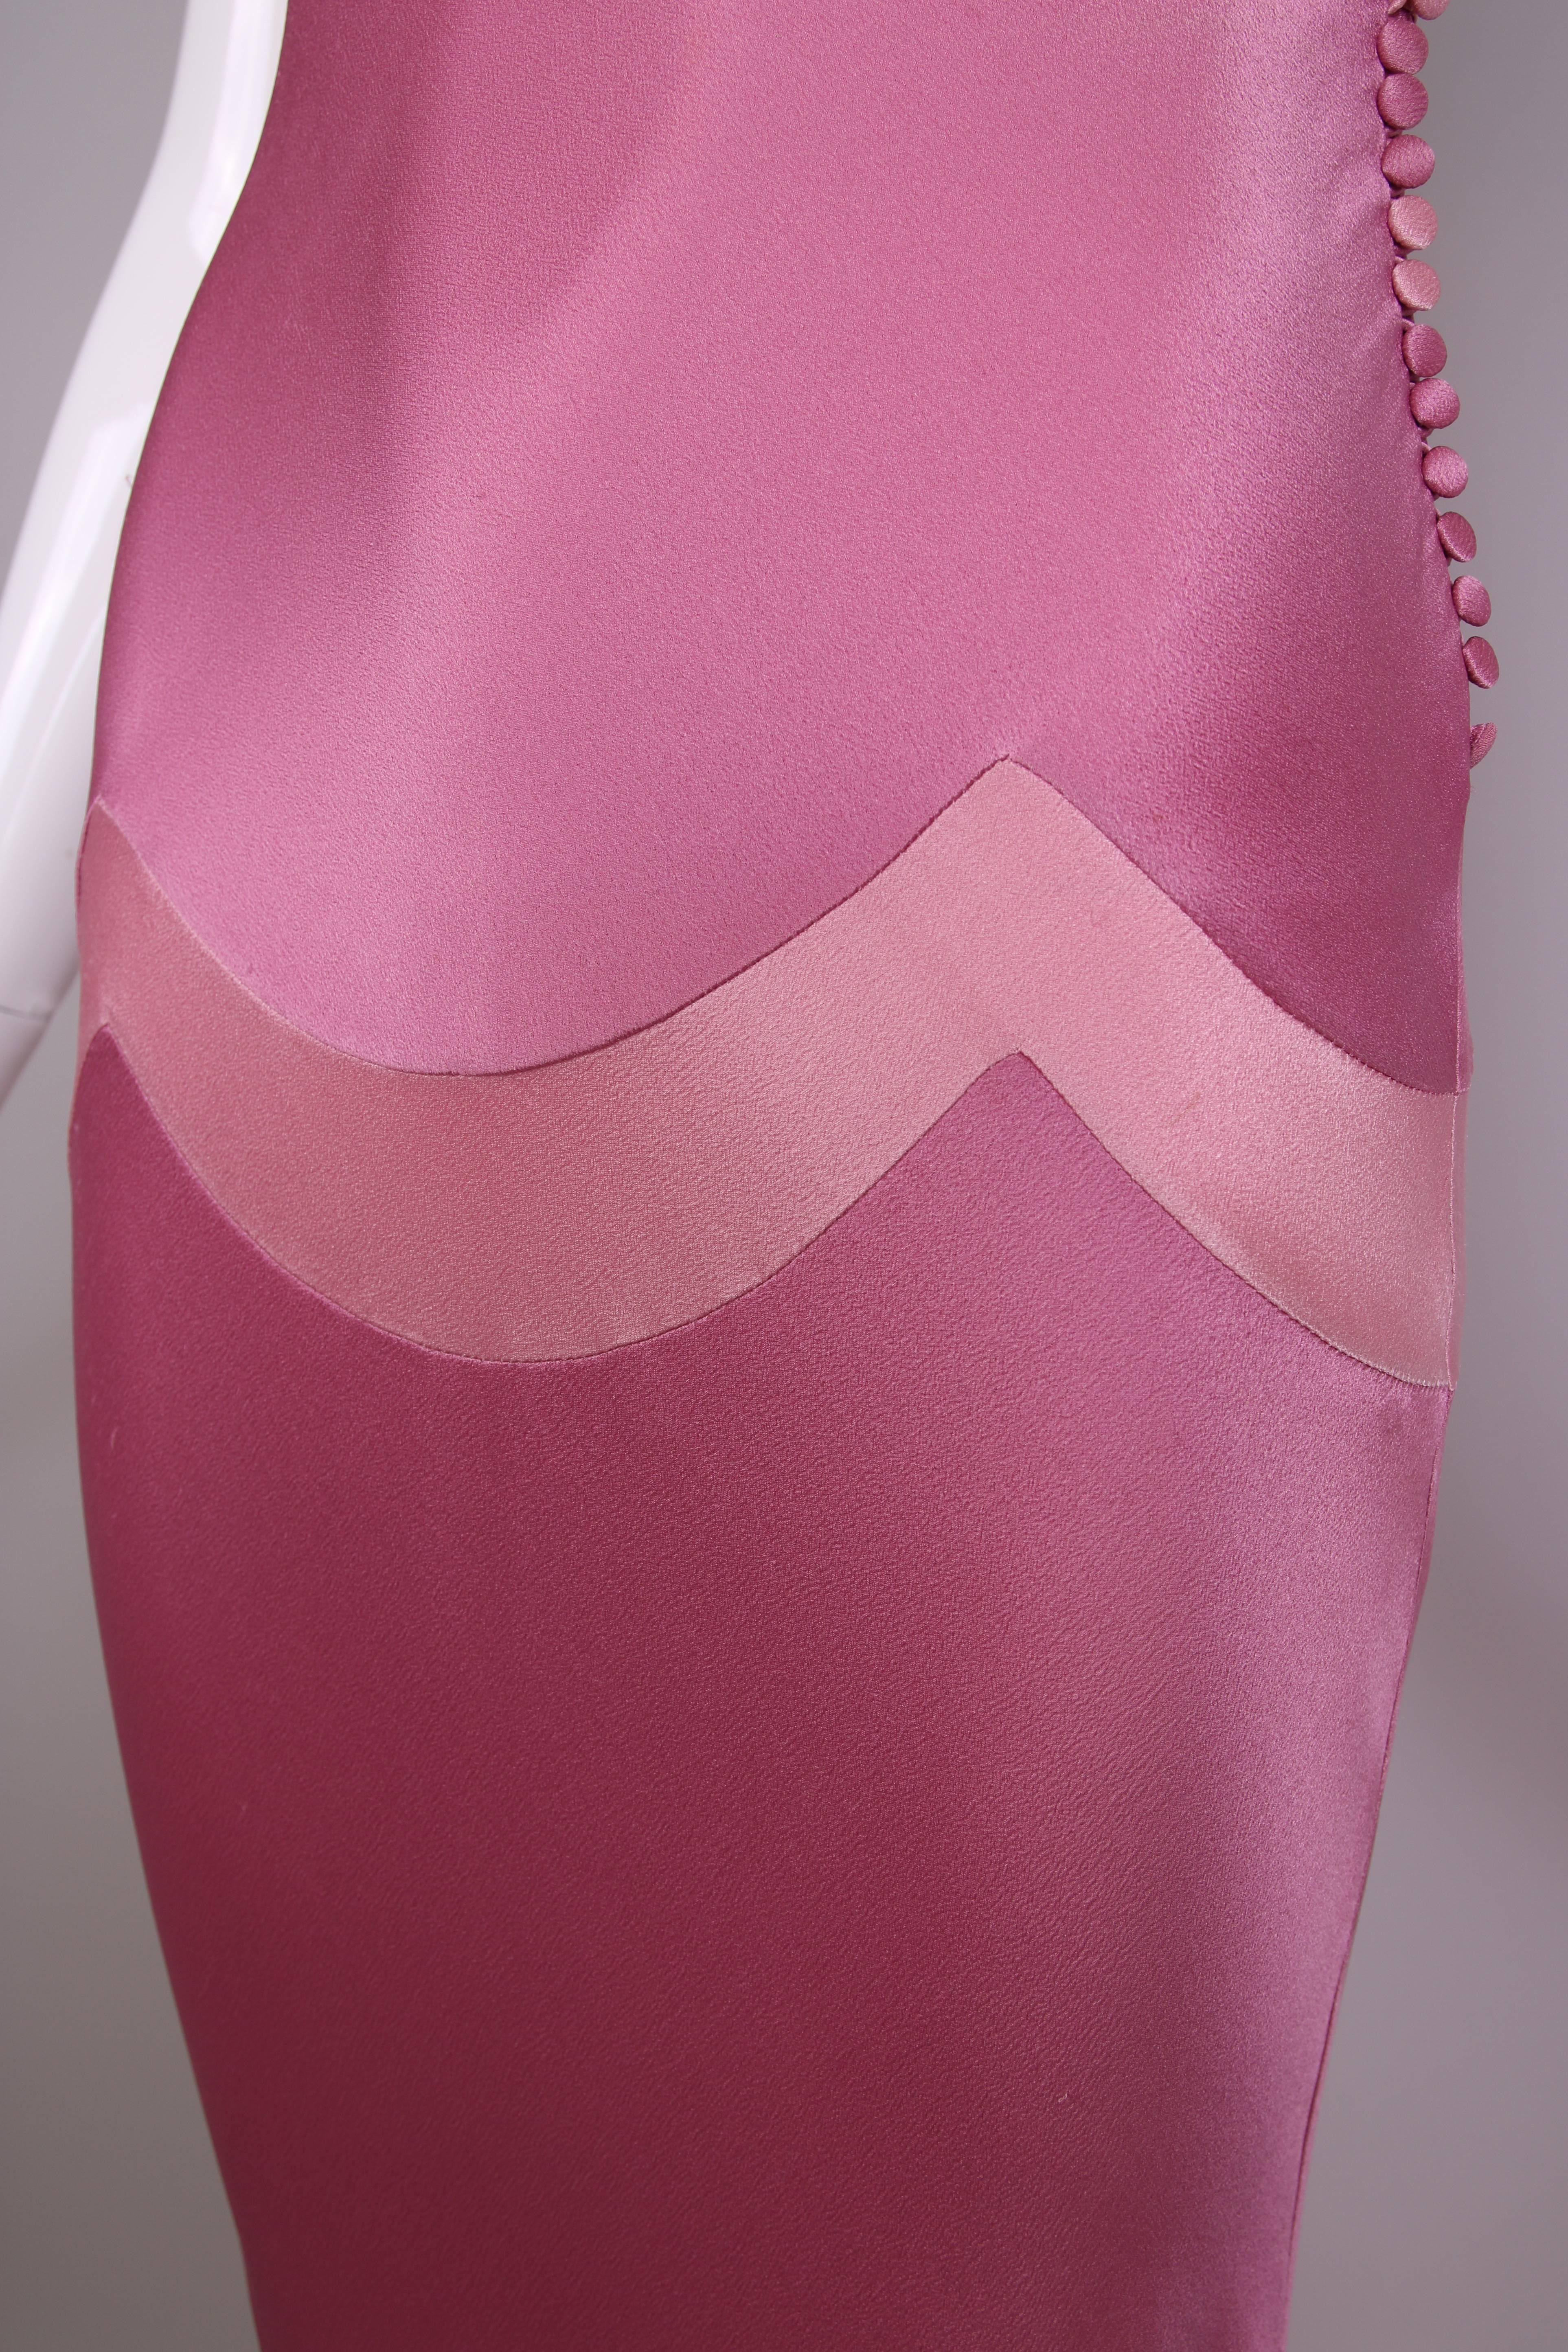 Christian Dior by Galliano Pink Silk Bias Cut Evening Gown W/Cowl Neckline 4